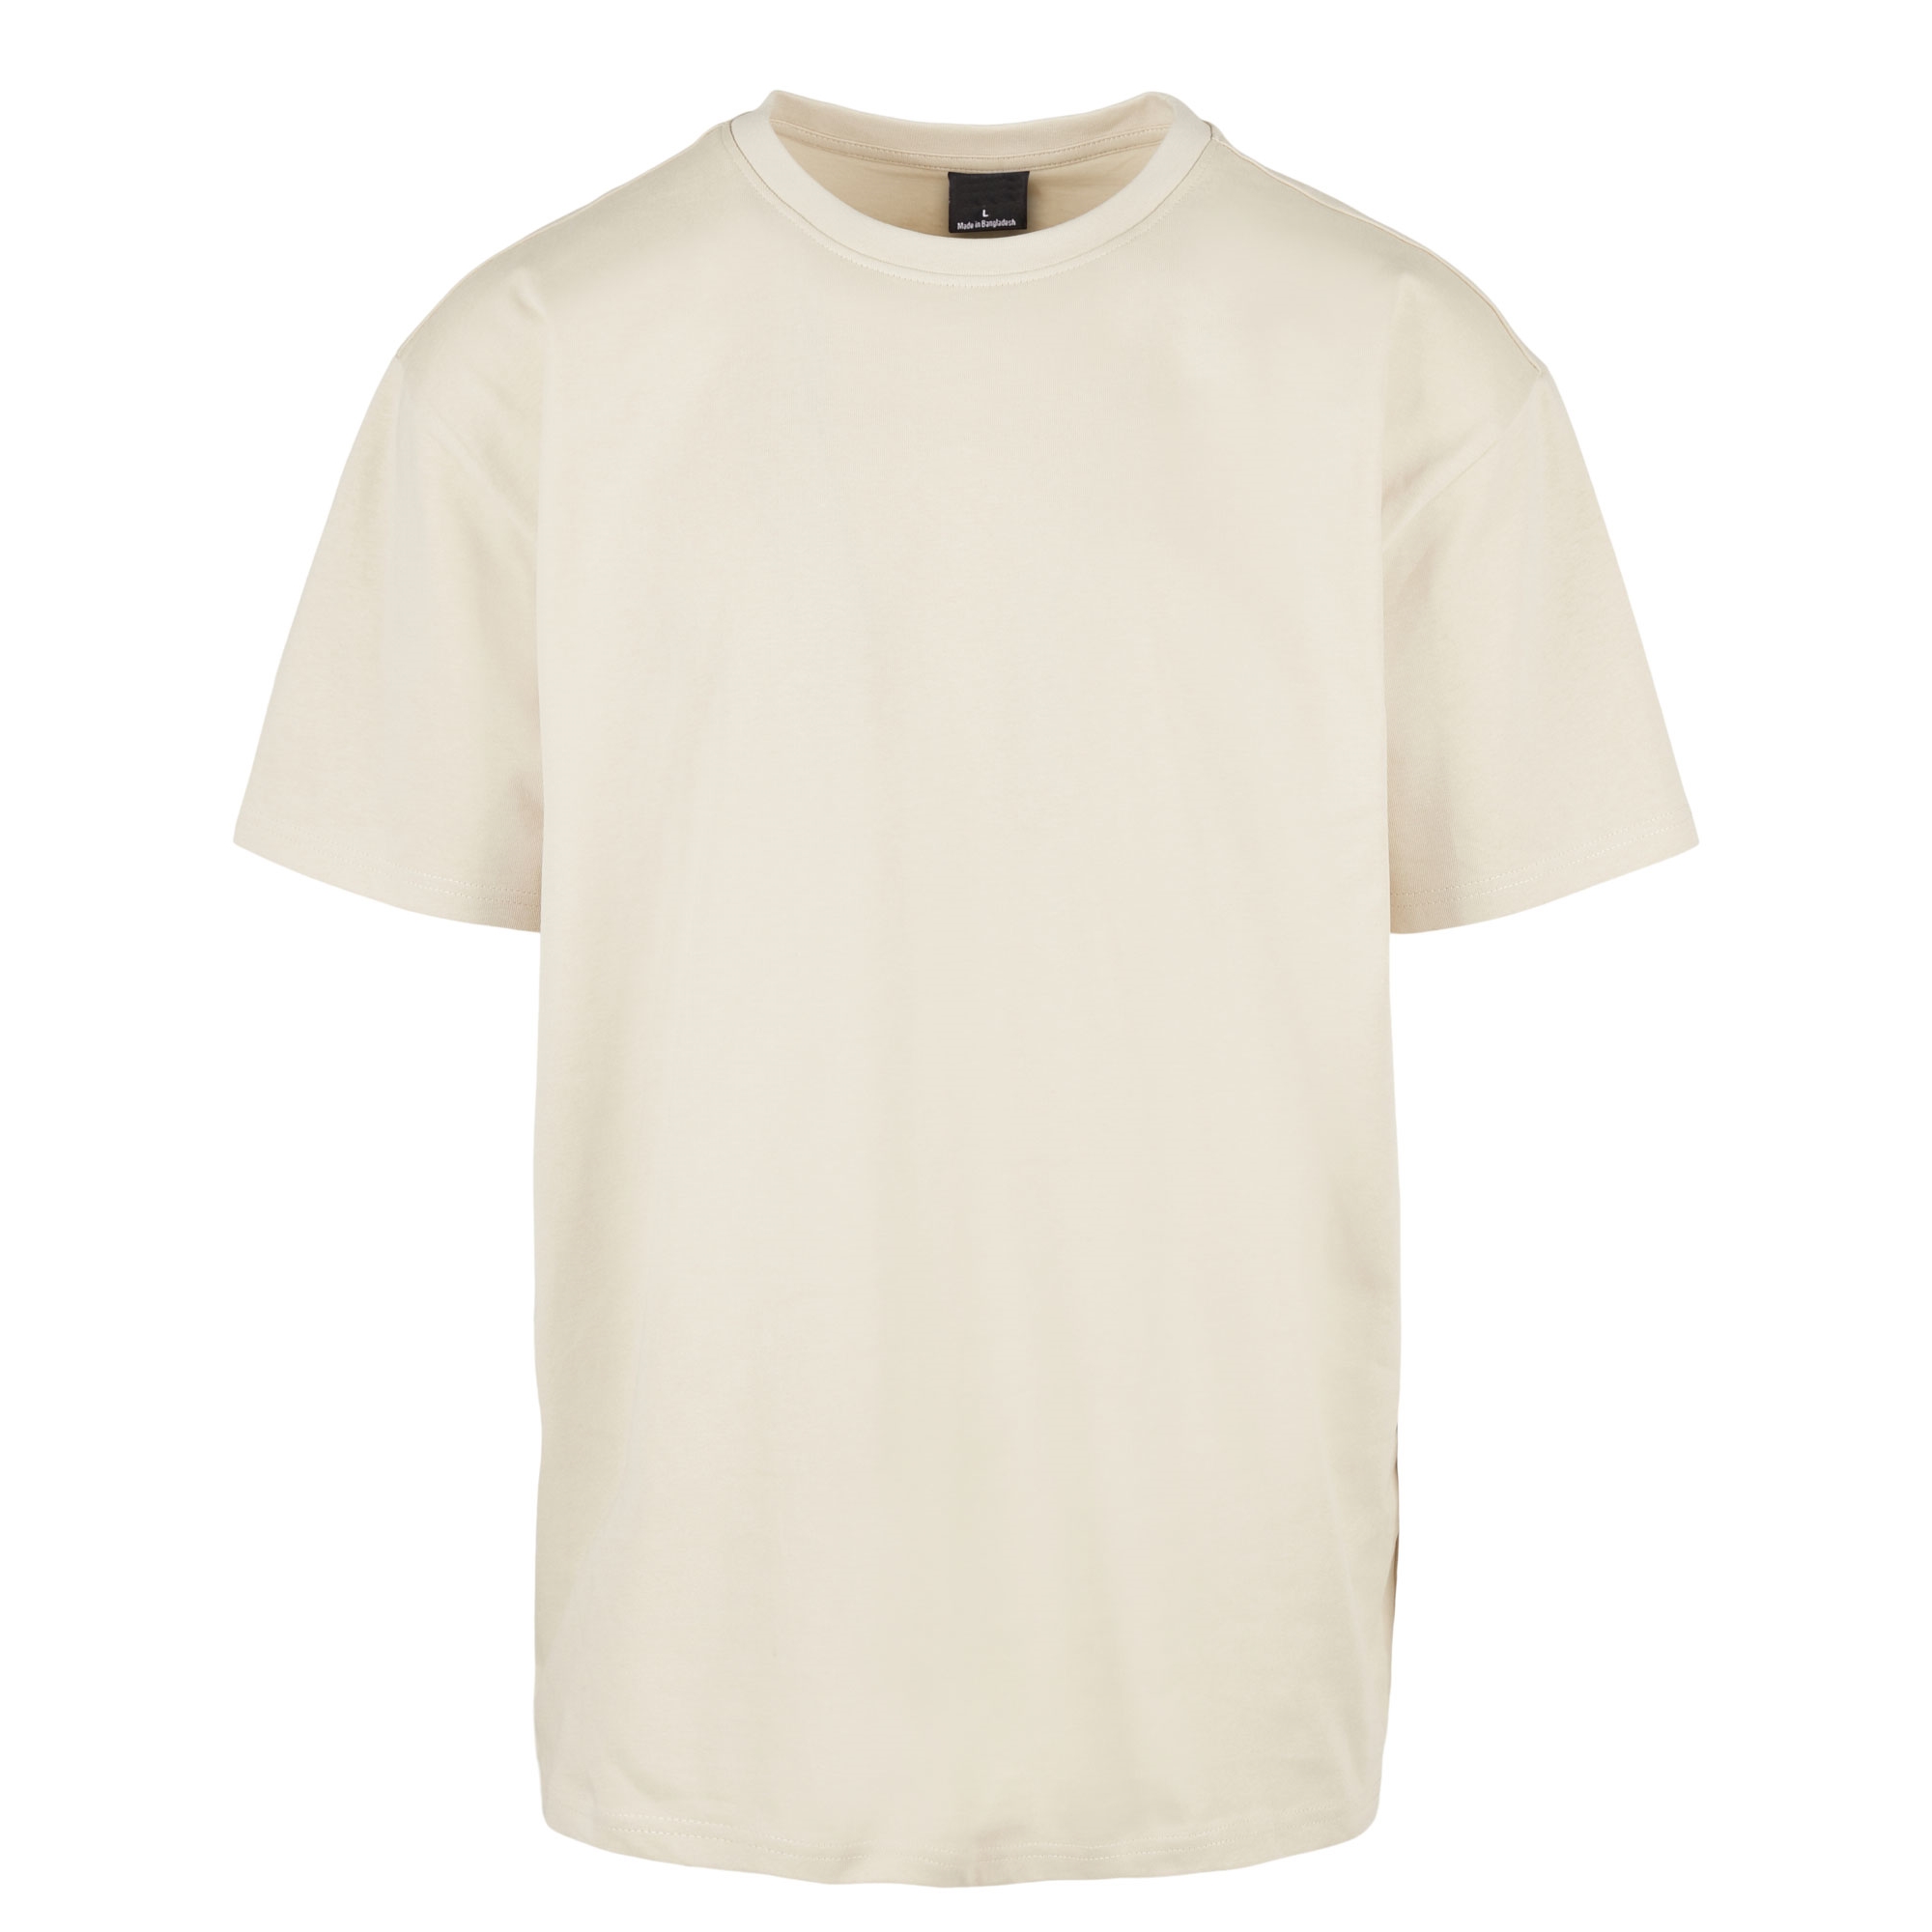 Herren Rundhals Urban Oversized Heavy eBay Tee | Extra Classic Lang Long T-Shirt XS-5XL